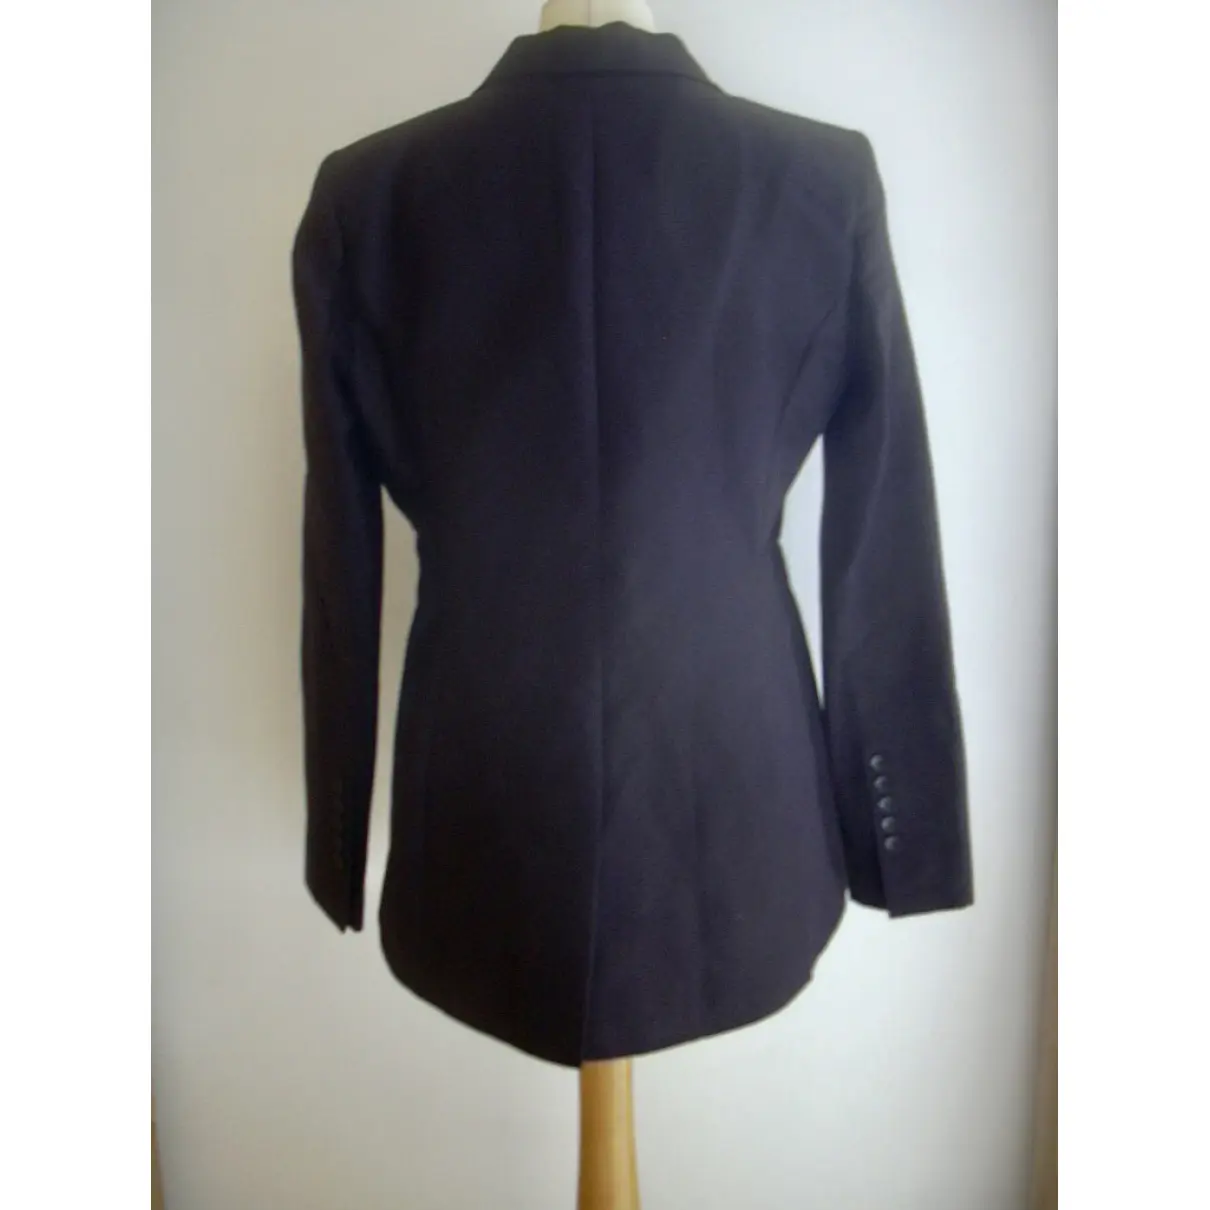 Buy Bcbg Max Azria Black Viscose Jacket online